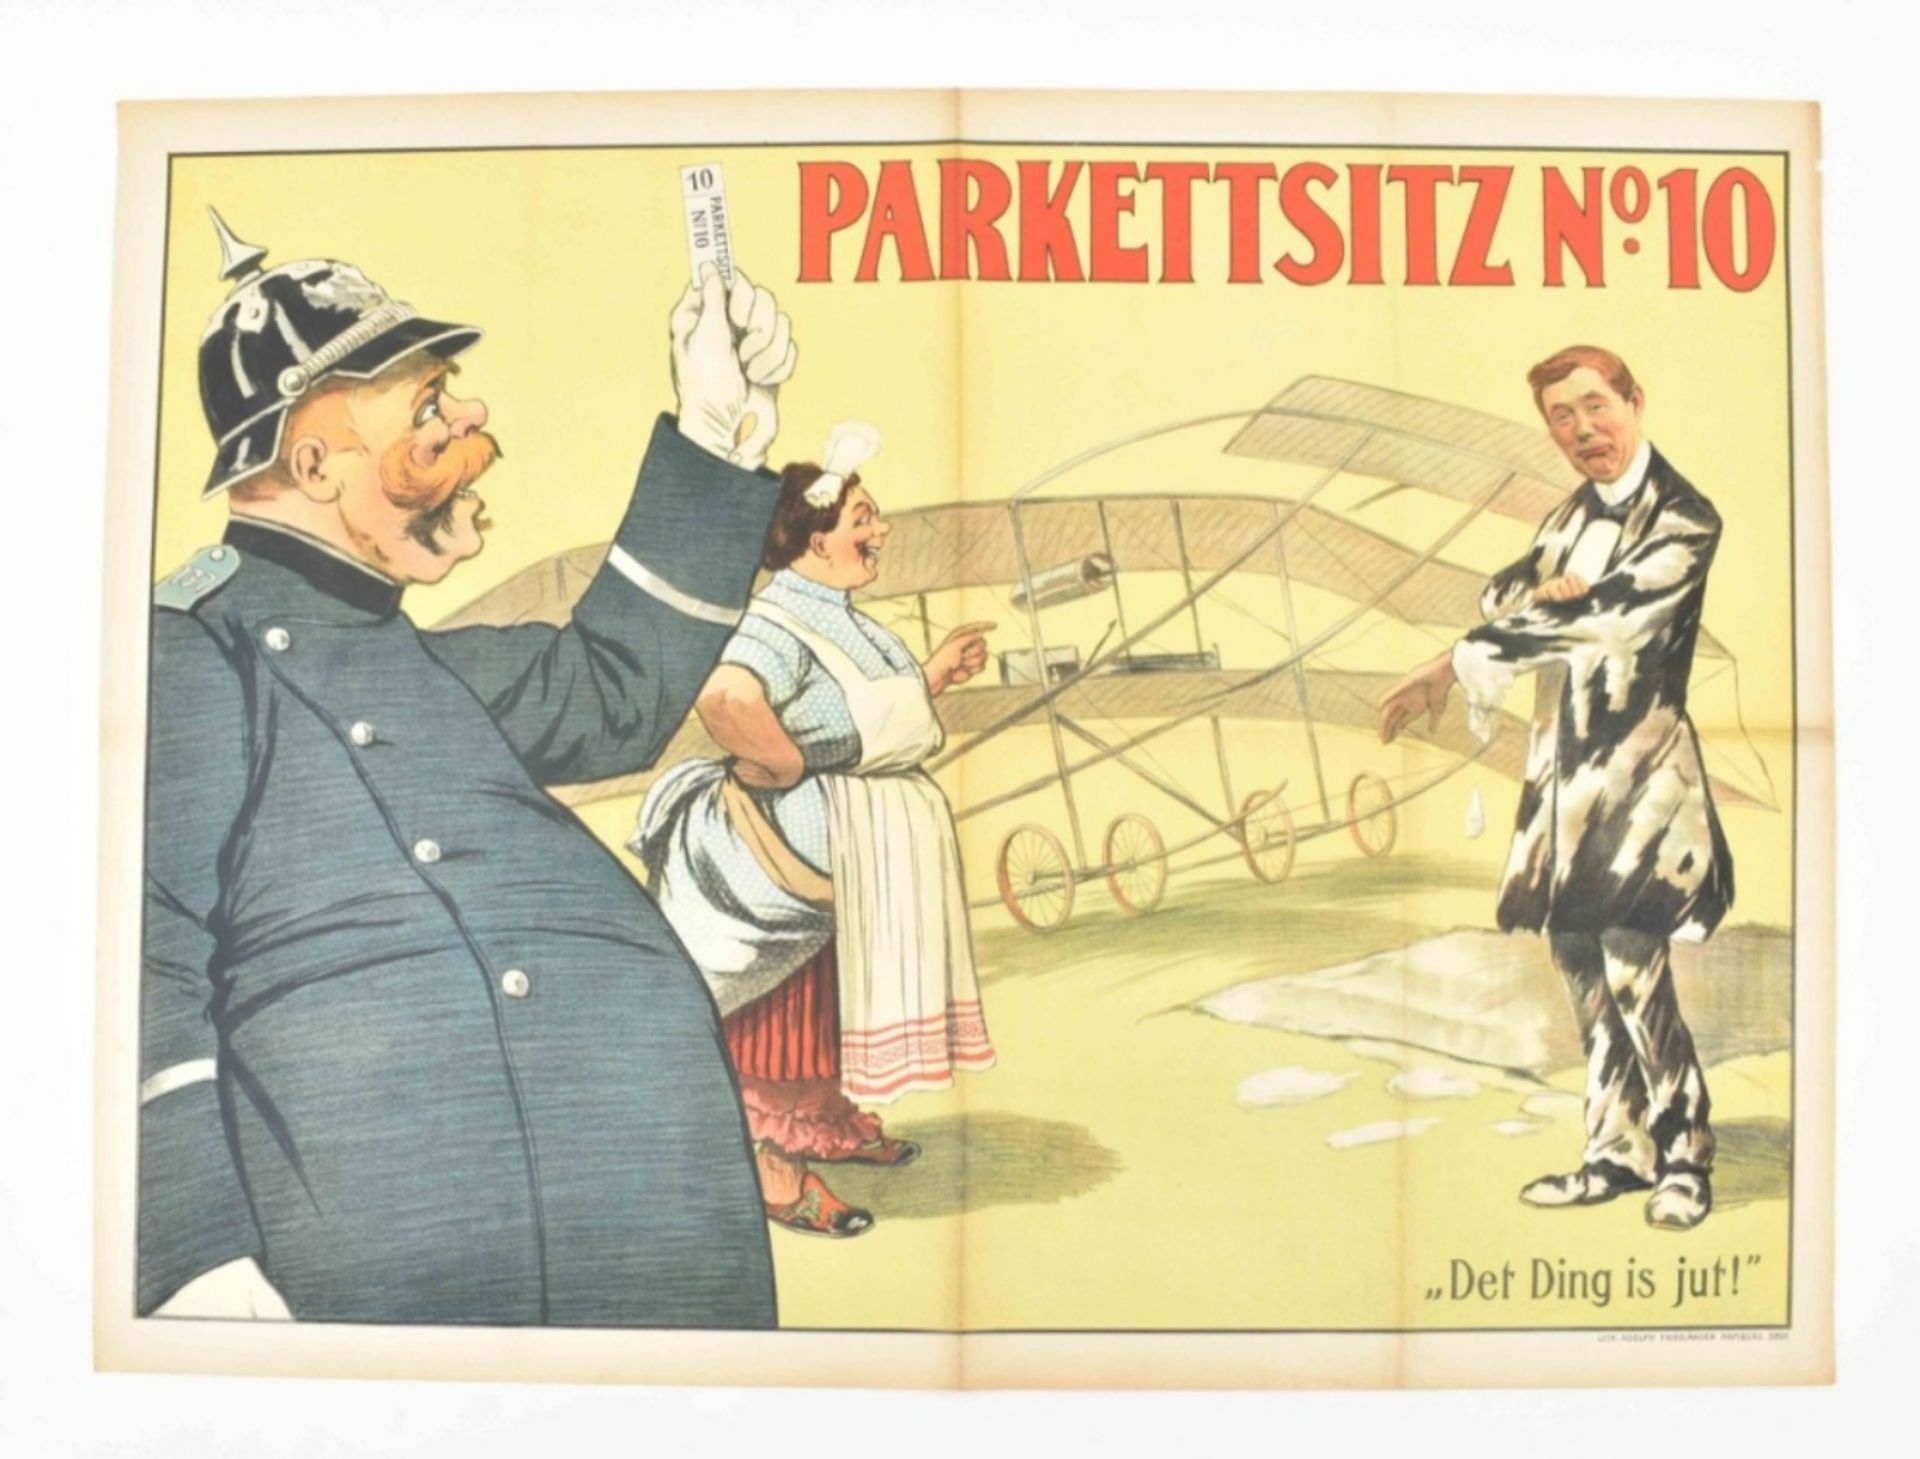 [Entertainment] Parkettsitz no. 10. Det Ding is jut! Friedländer, Hamburg, 1913